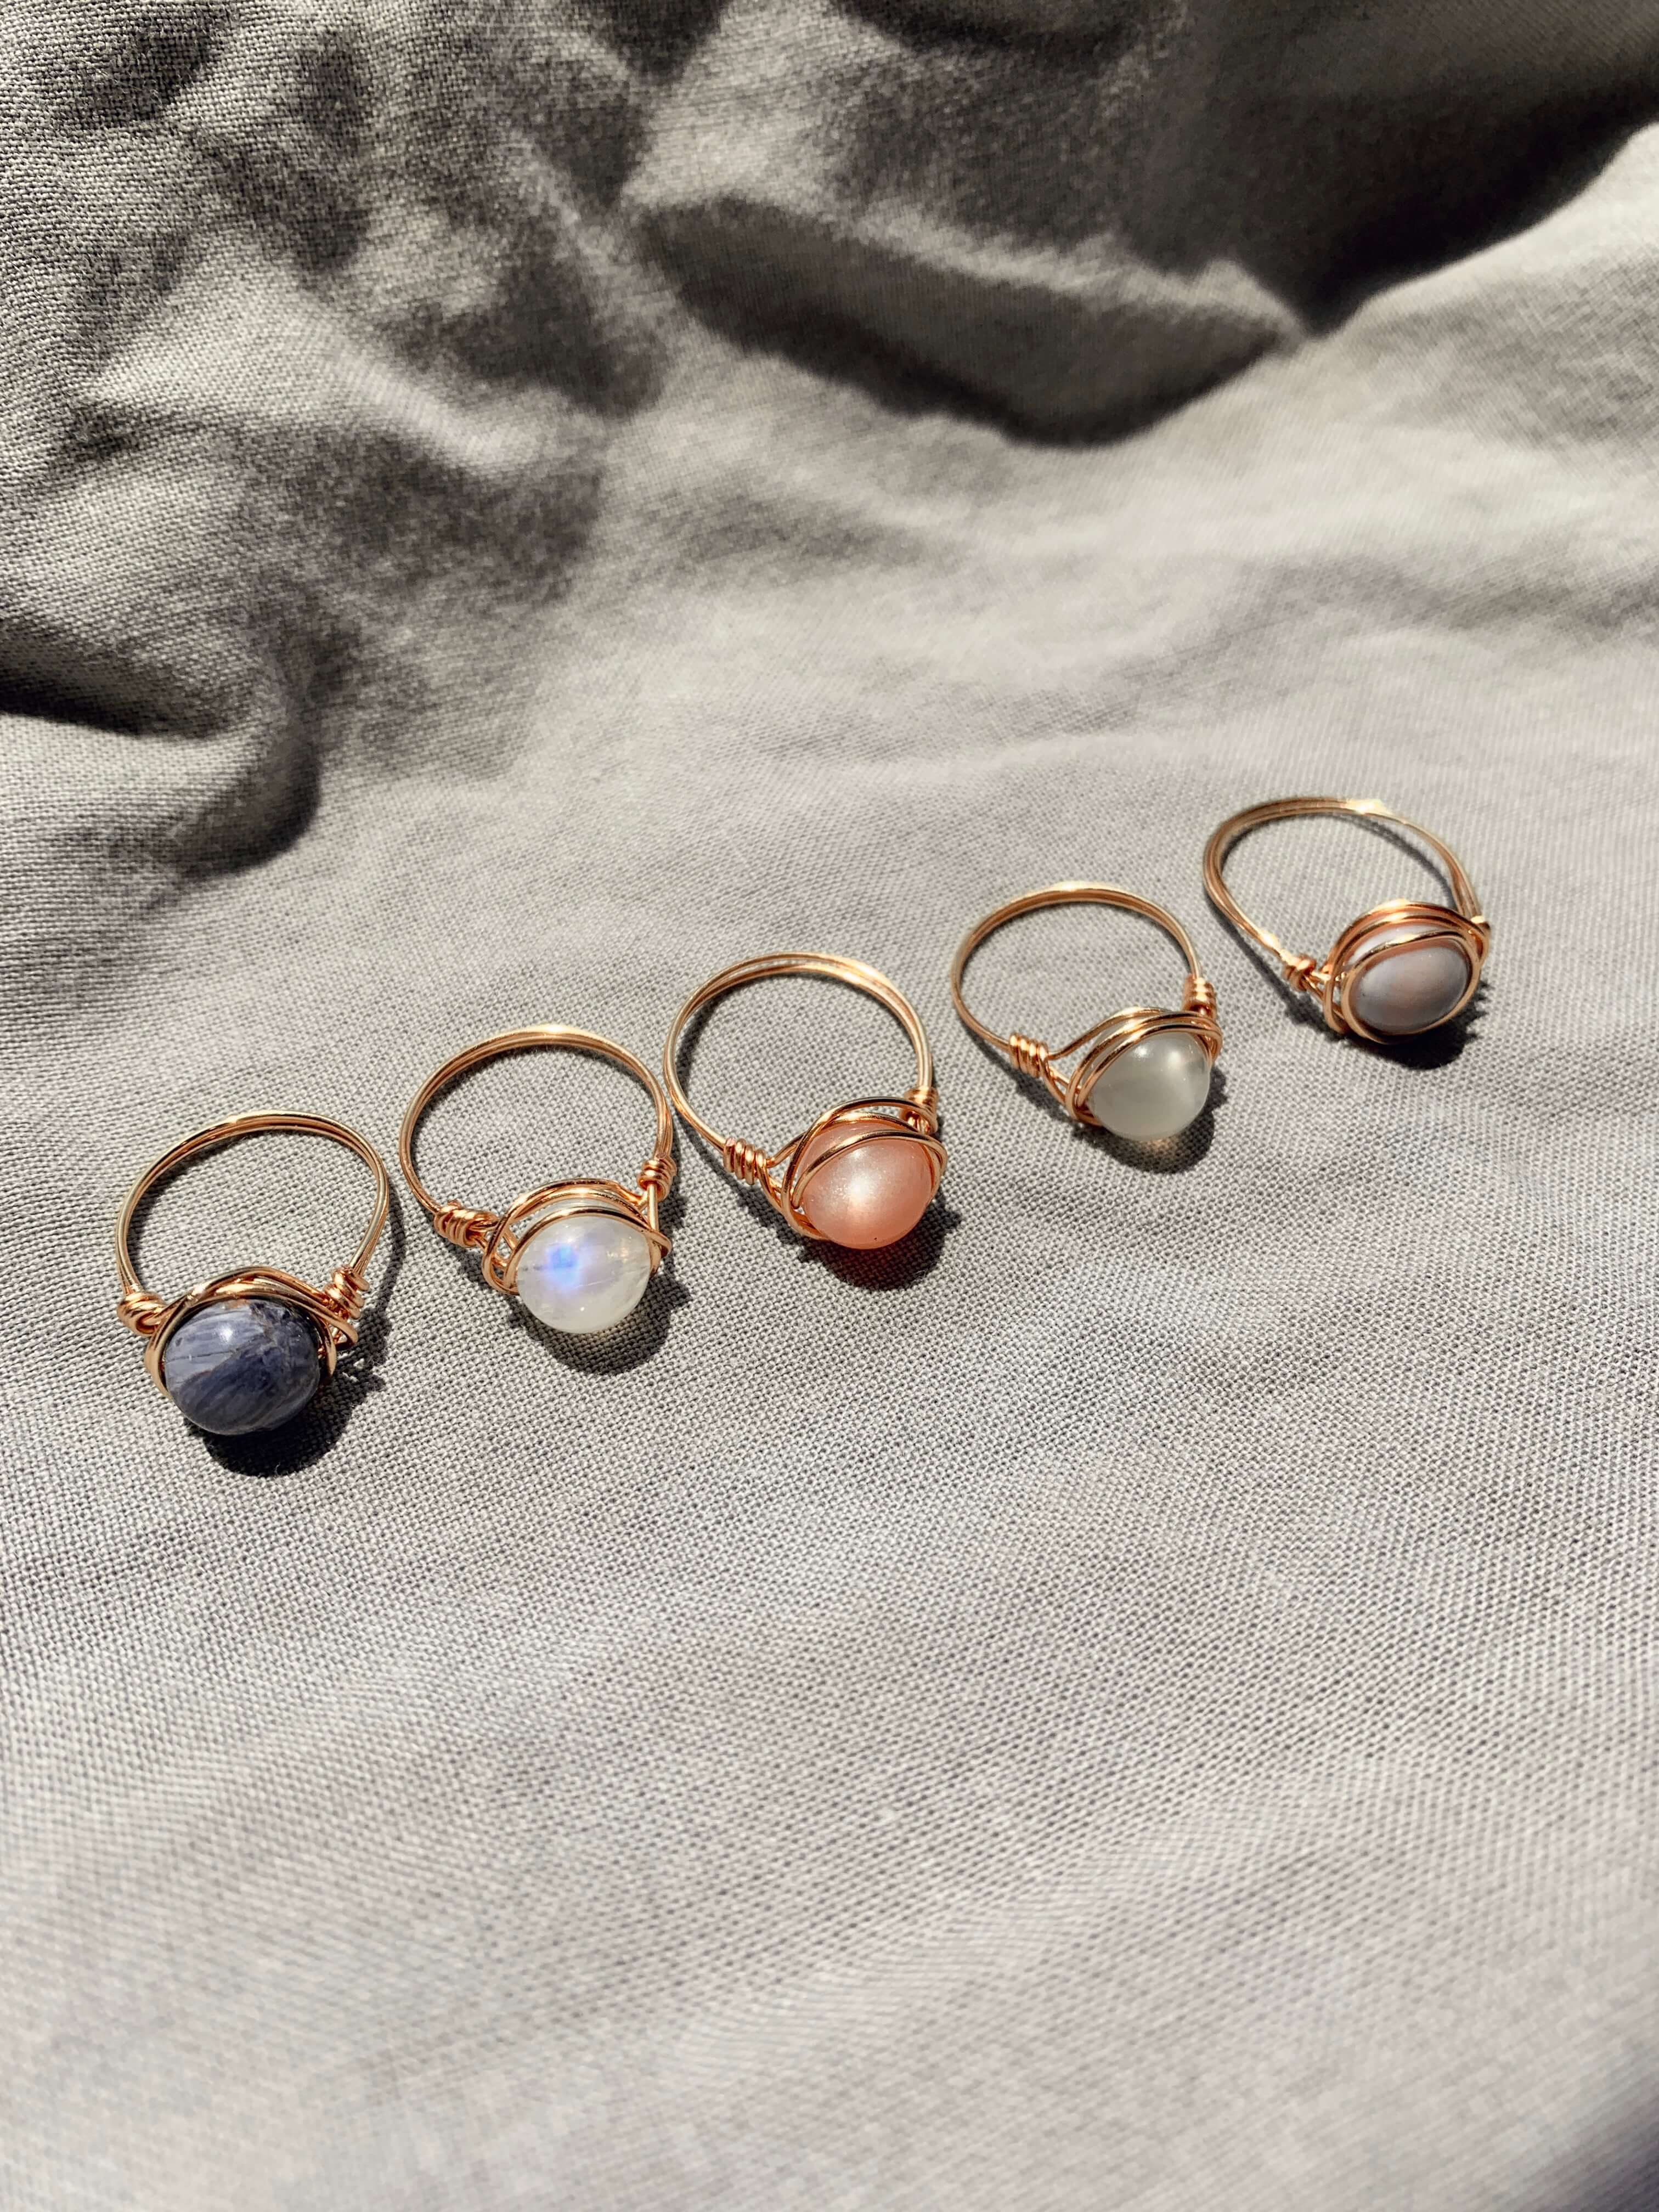 Peach Moon Ring - 14KGF-Jewelry-QuazarJewelry